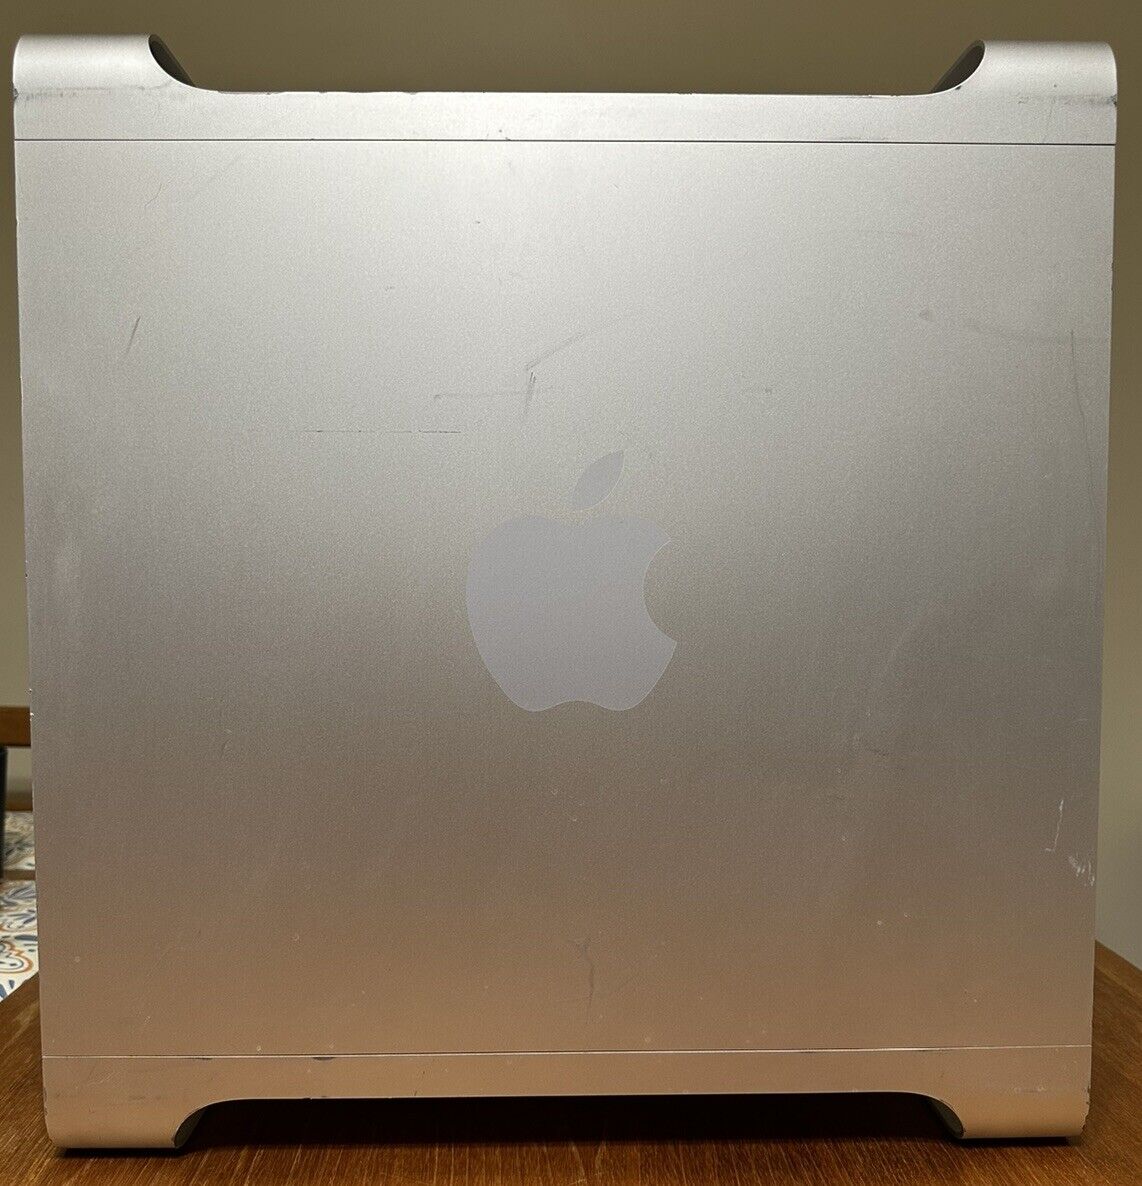 Apple Power Mac G5, Dual 2.0GHz, 2GB RAM, ATI Radeon 9600, 150GB HD, OSX 10.5.8